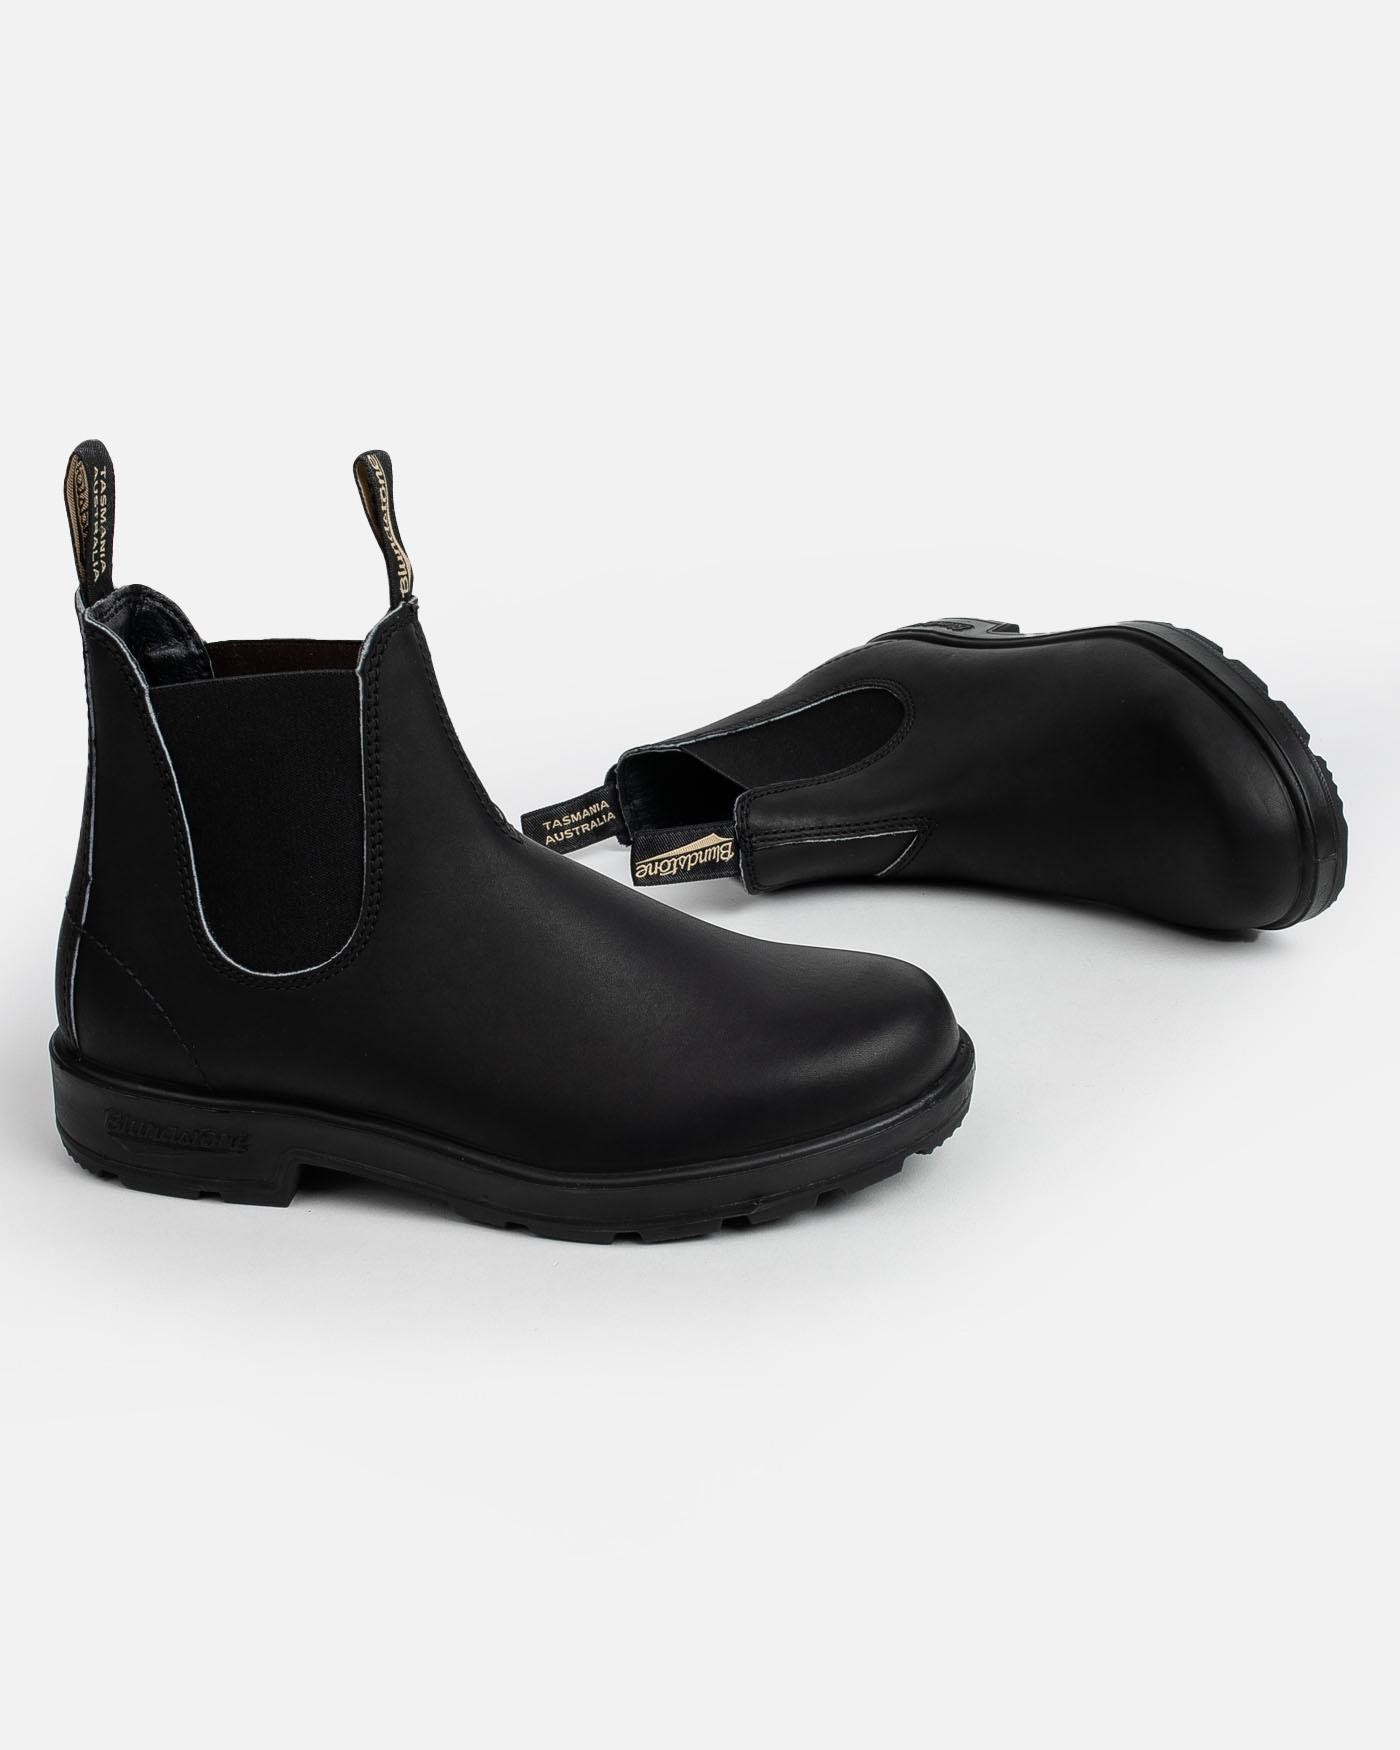 blundstone-botas-chelsea-classic-500-boots-black-negras-7